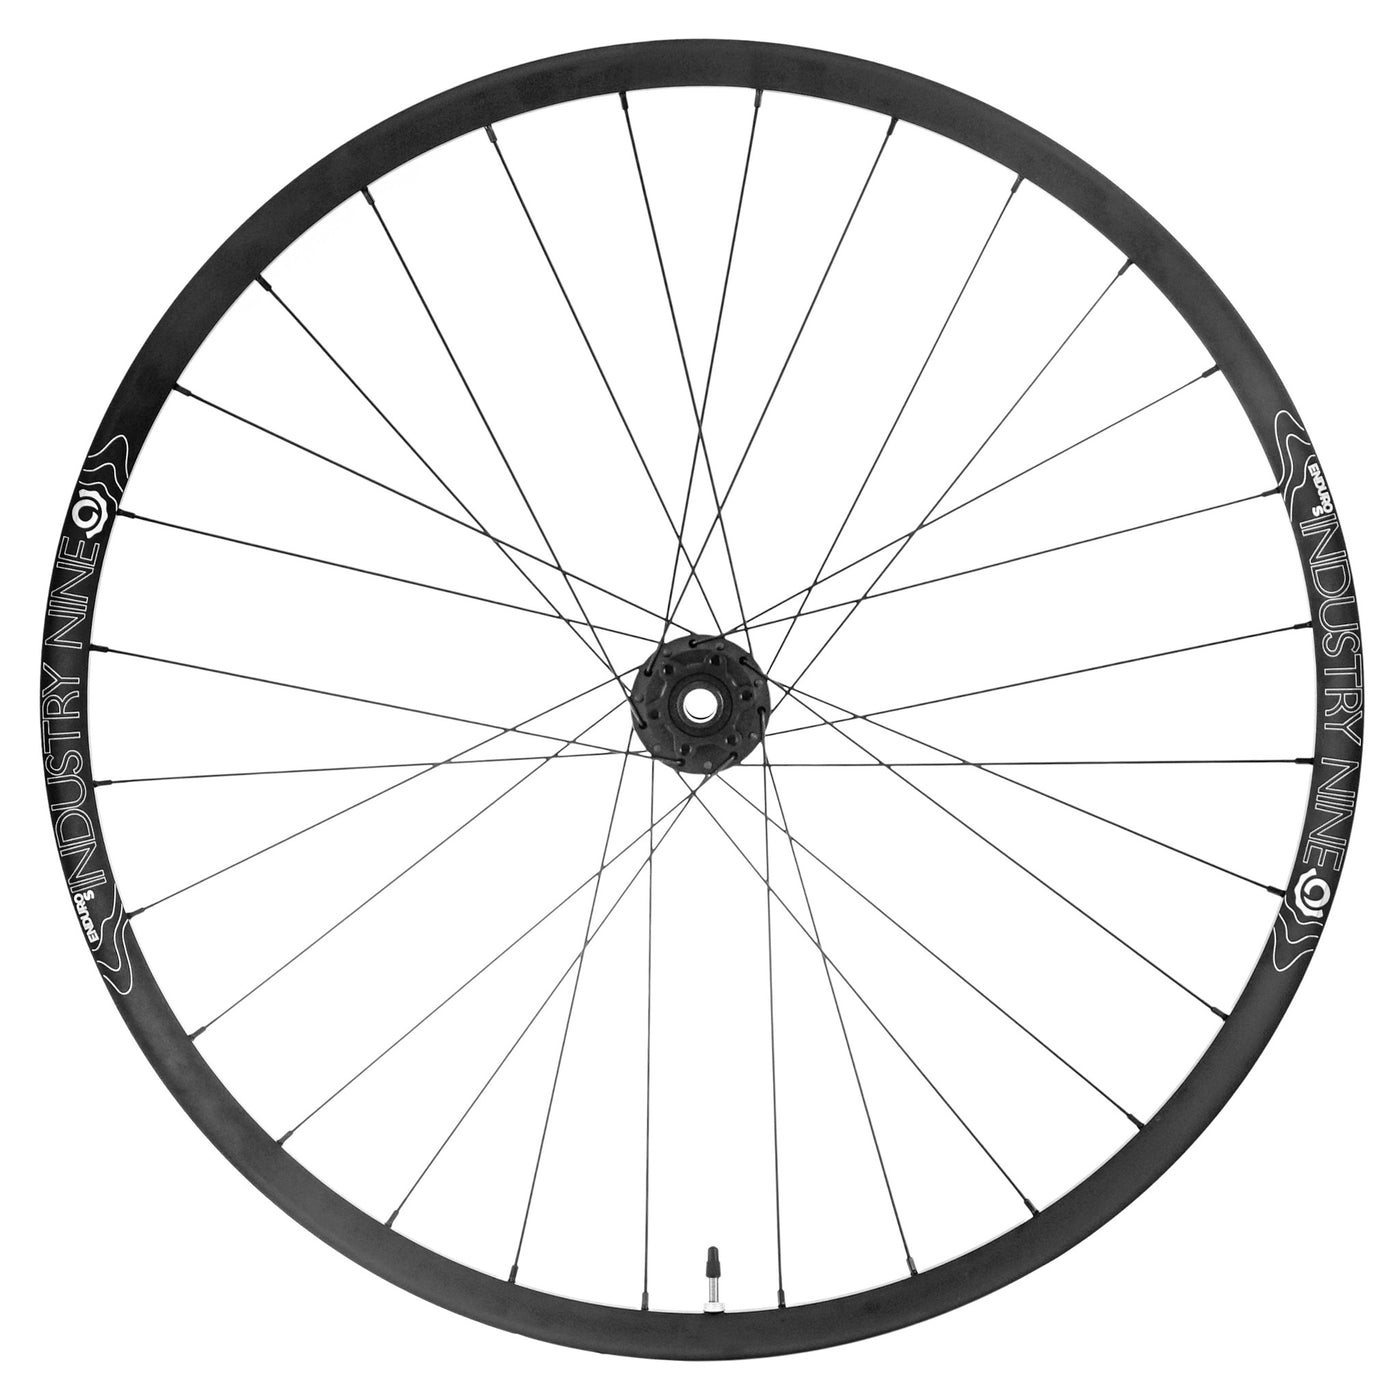 Enduro S 1/1 Rear Wheel